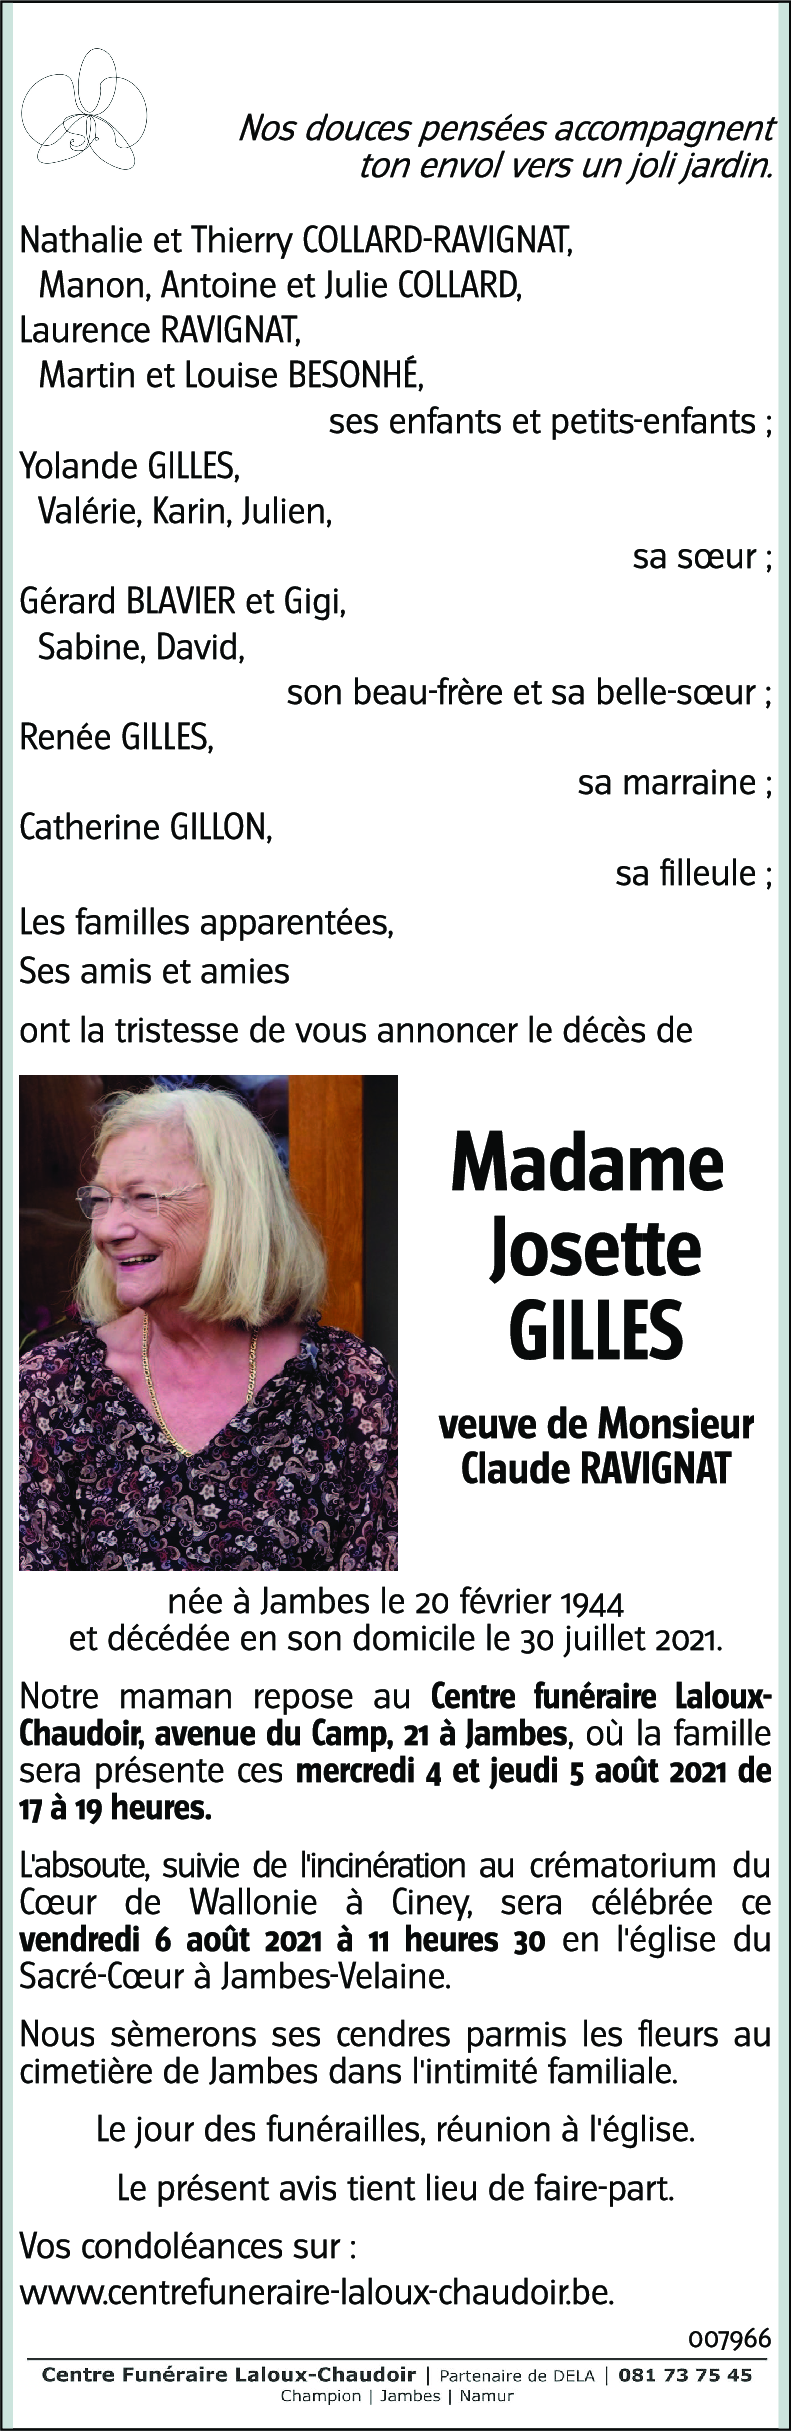 Josette GILLES